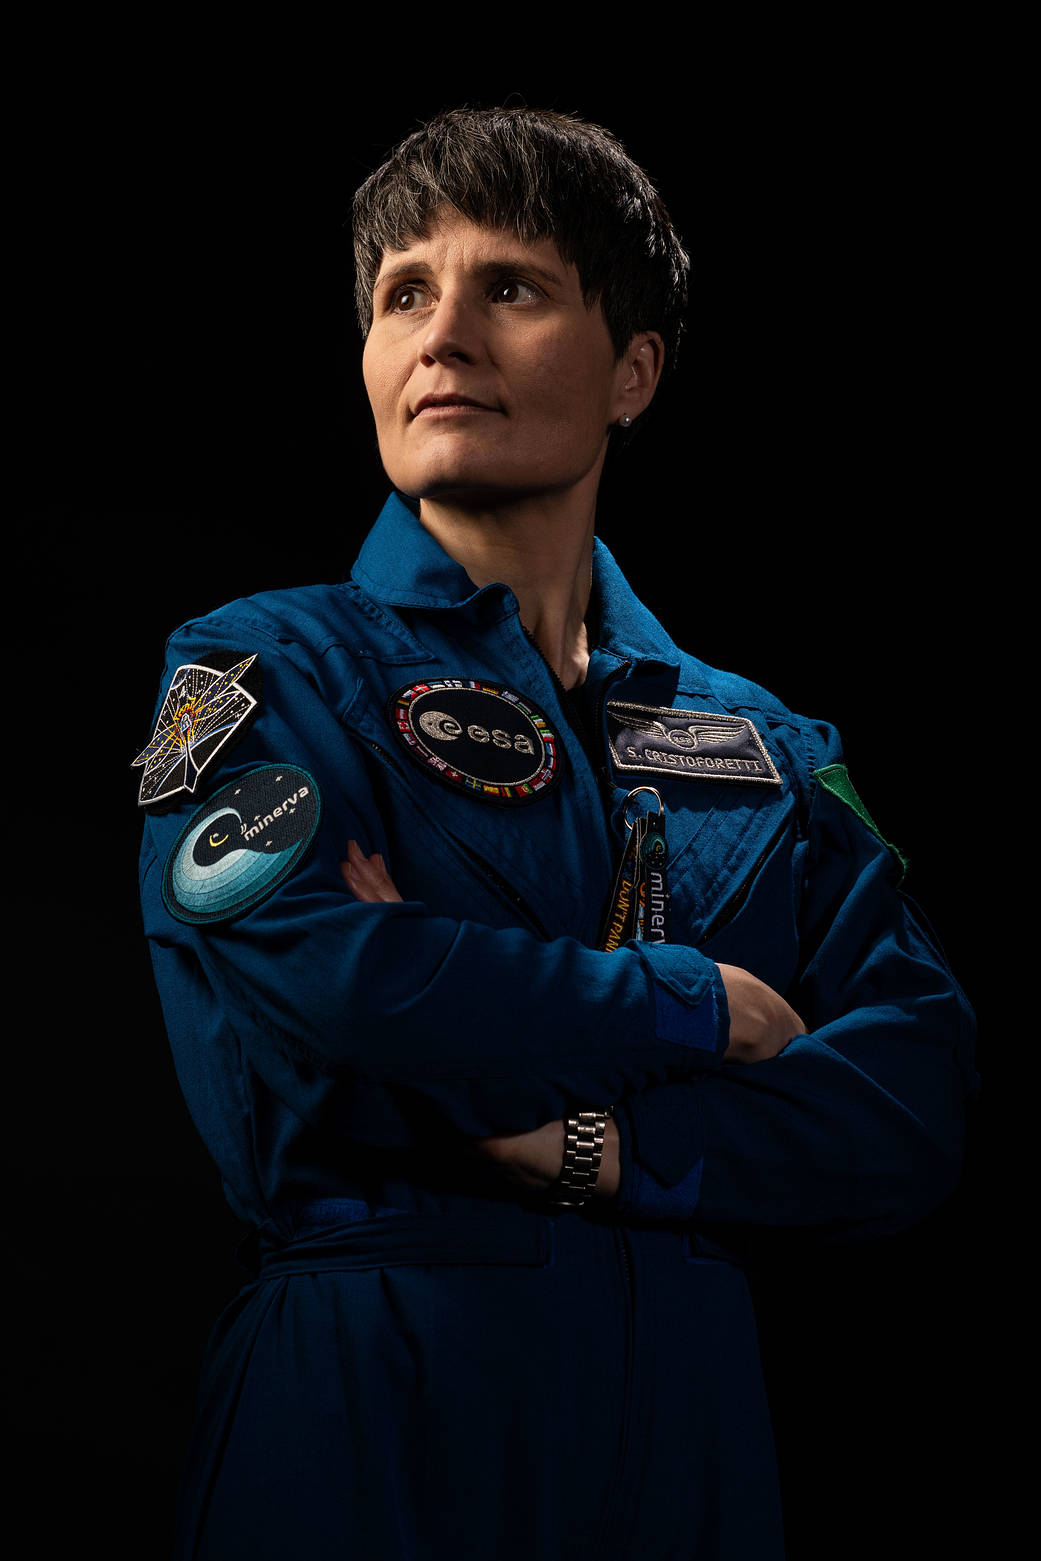 SpaceX Crew-4 Mission Specialist Samantha Cristoforetti